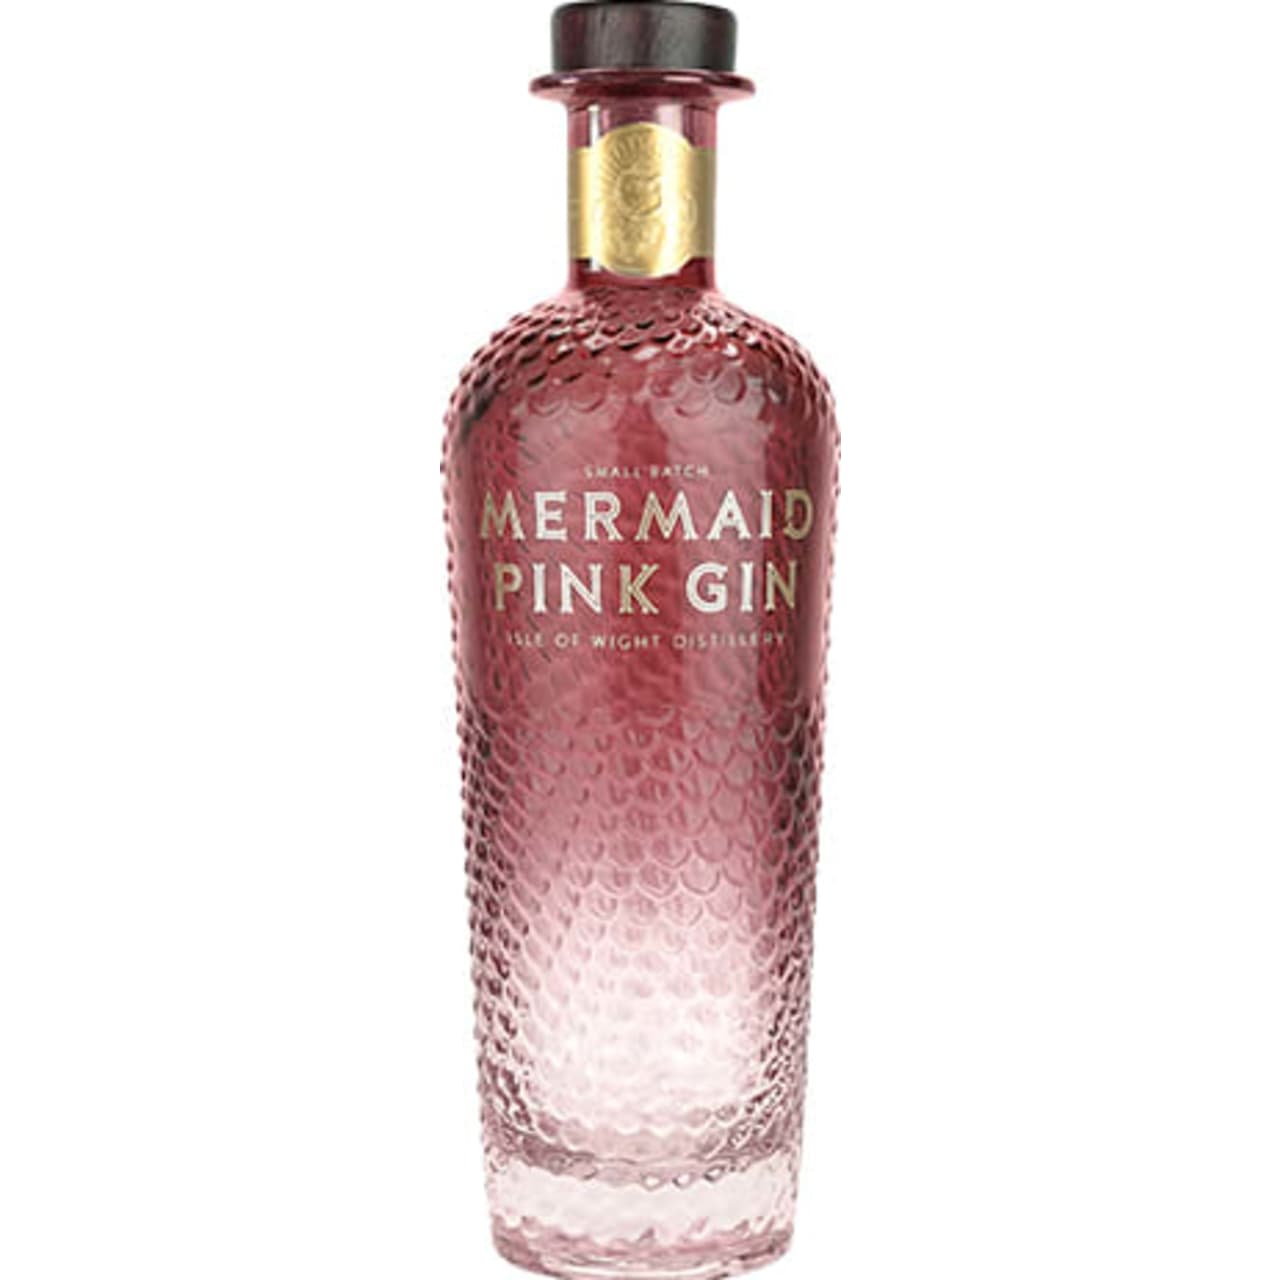 Product Image - Mermaid Pink Gin